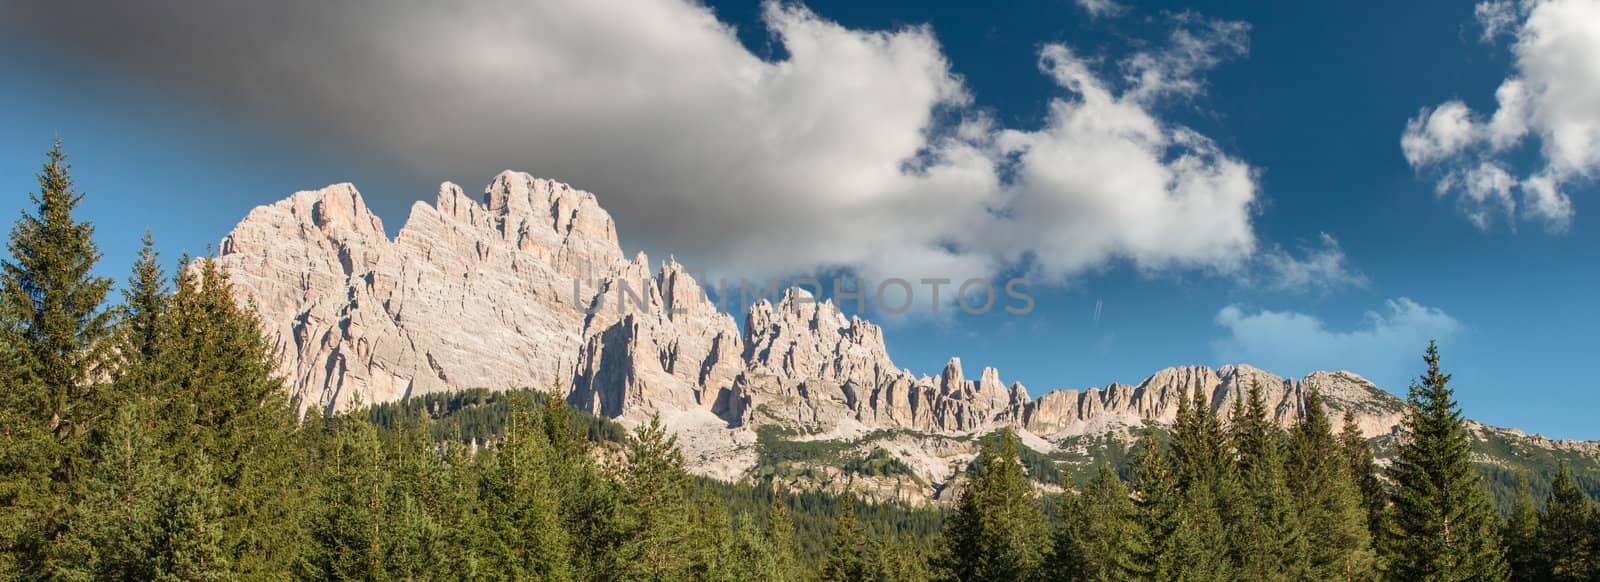 Wonderful sky colors over Dolomites - Italian Alps by jovannig